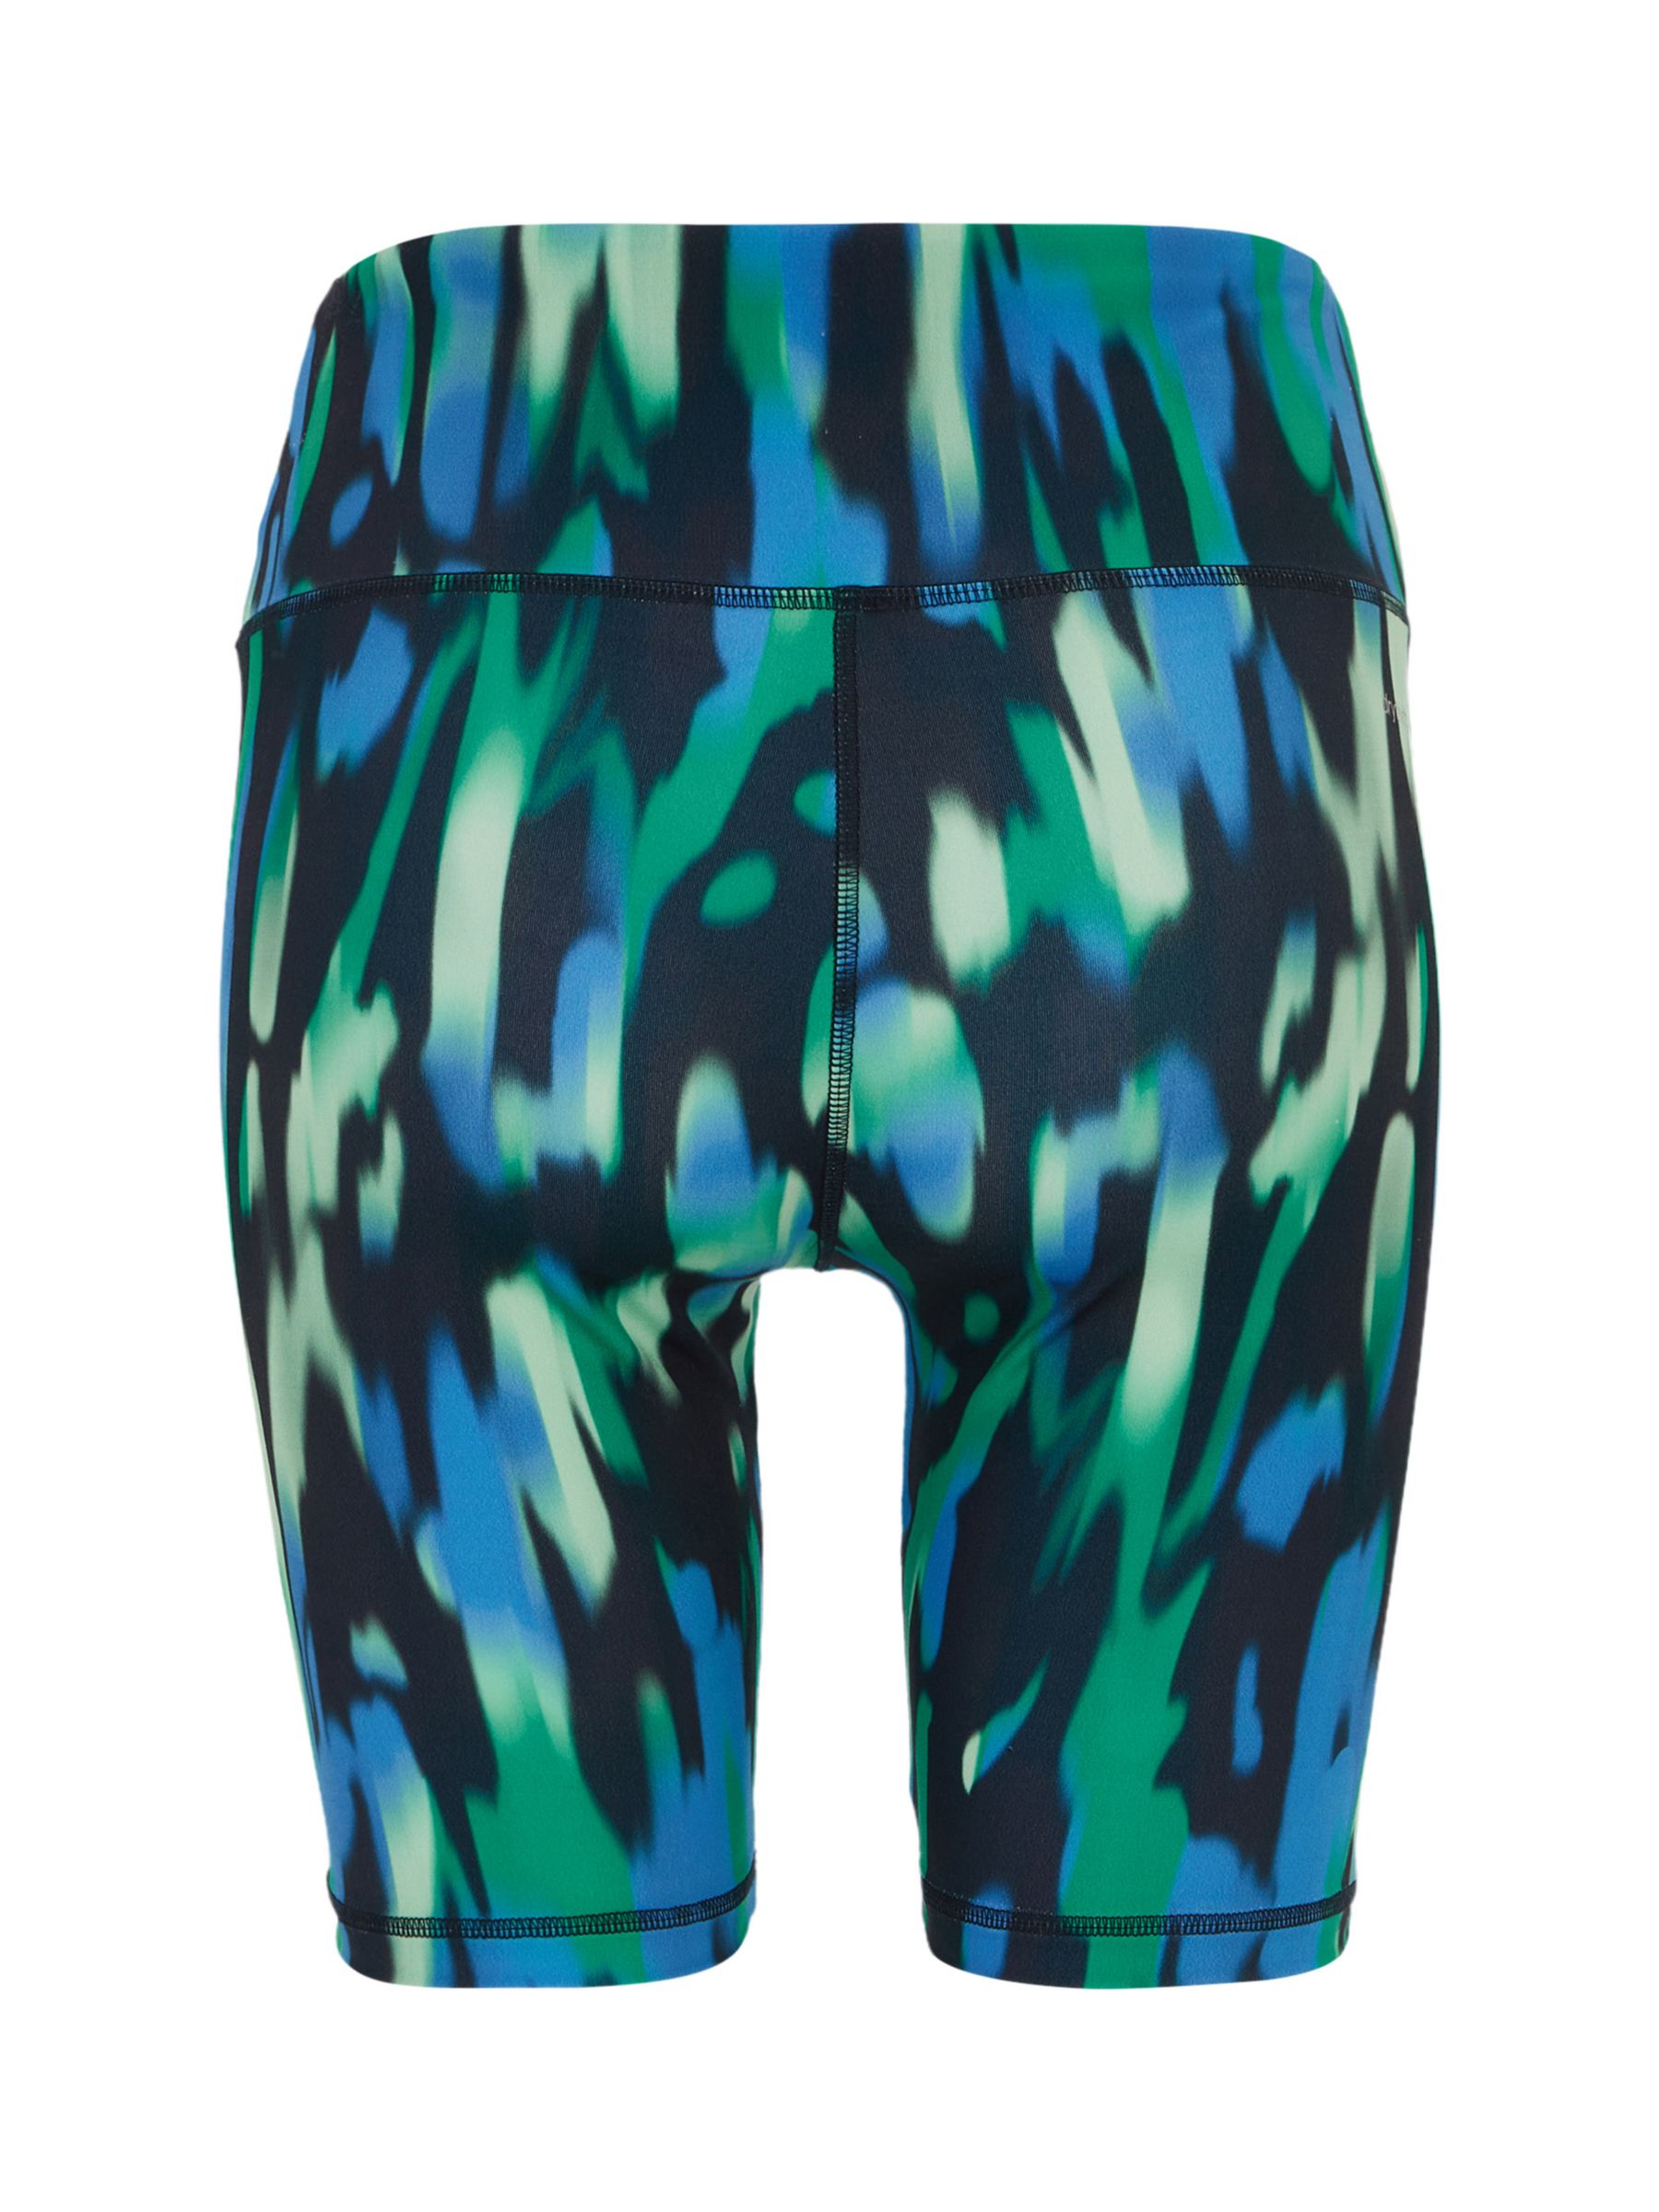 Venice Beach Beca Shorts, Green/Multi, XS